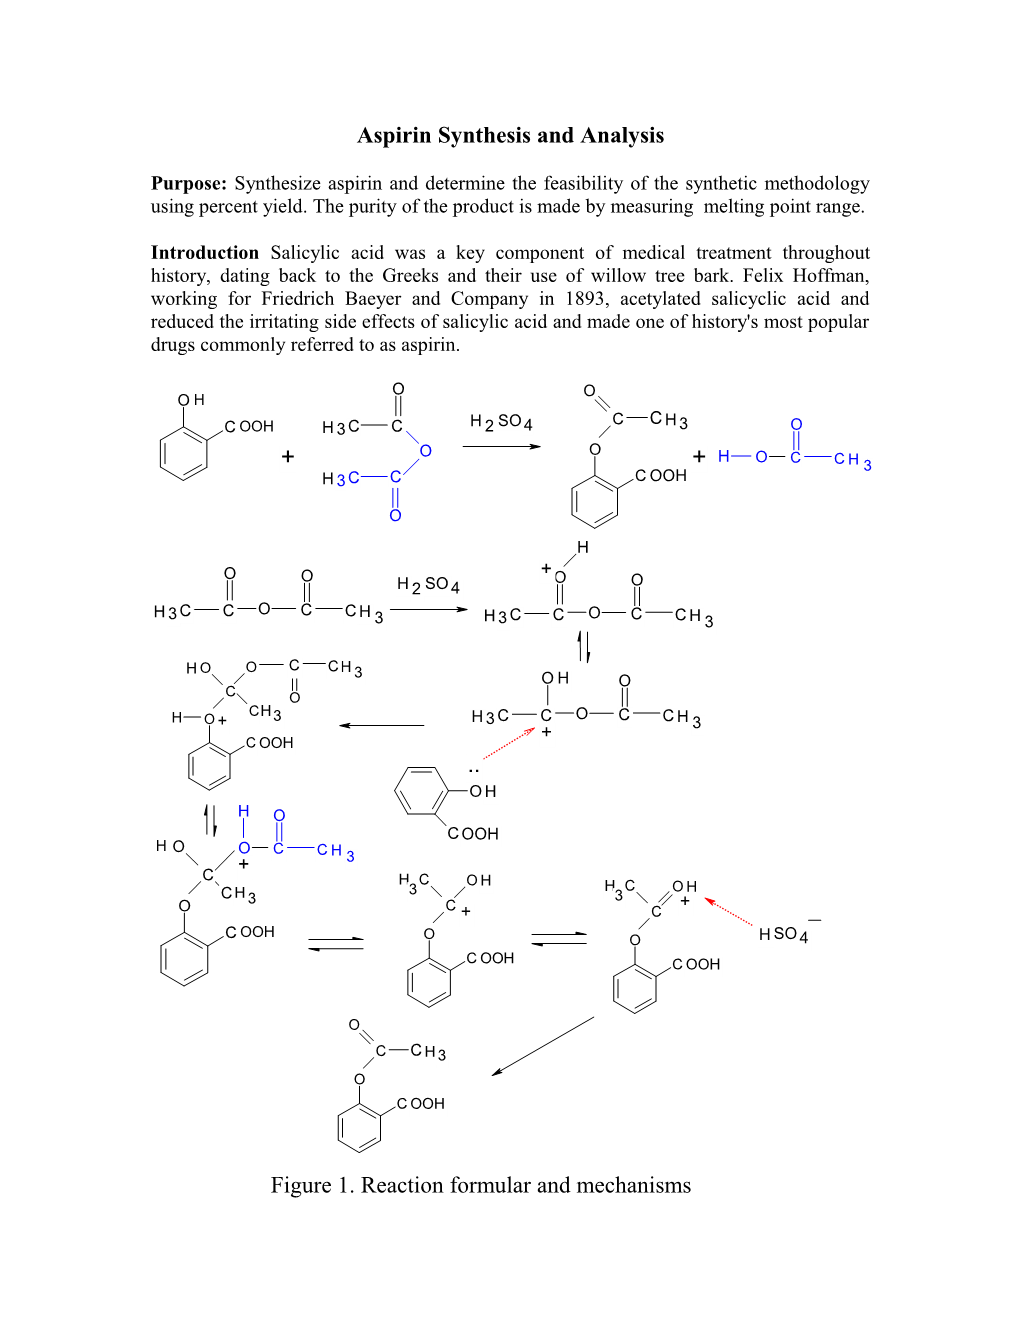 Aspirin Synthesis and Analysis